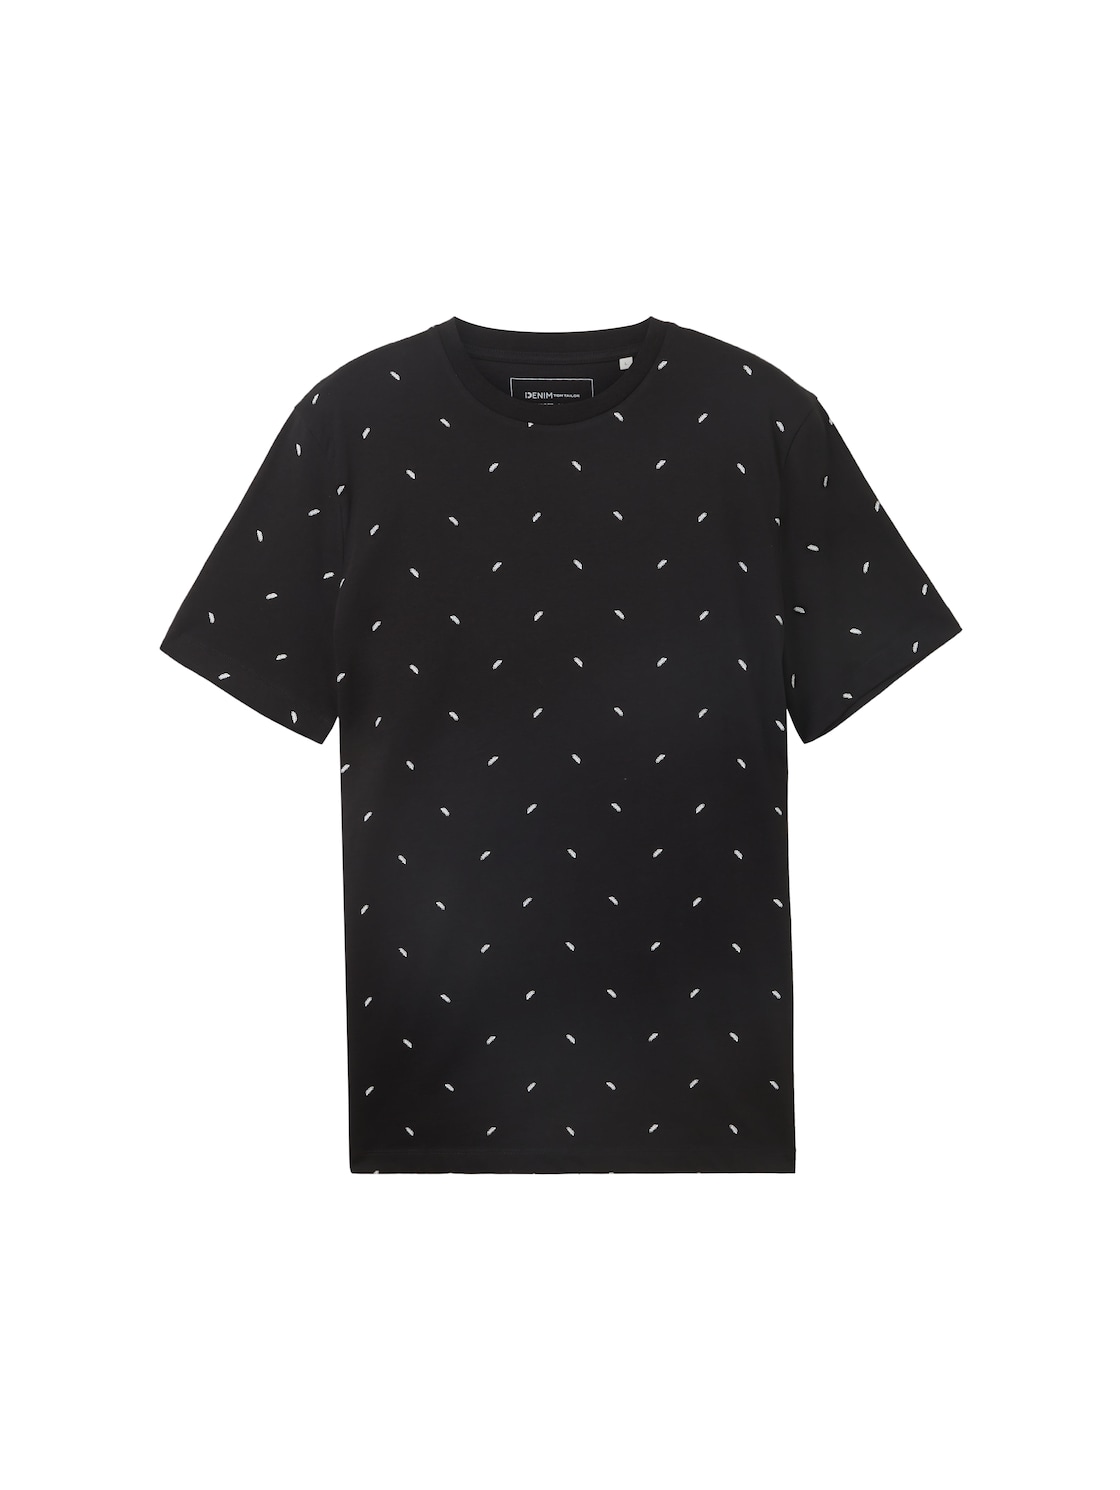 TOM TAILOR DENIM Herren T-Shirt mit Allover Print, schwarz, Allover Print, Gr. XL von Tom Tailor Denim